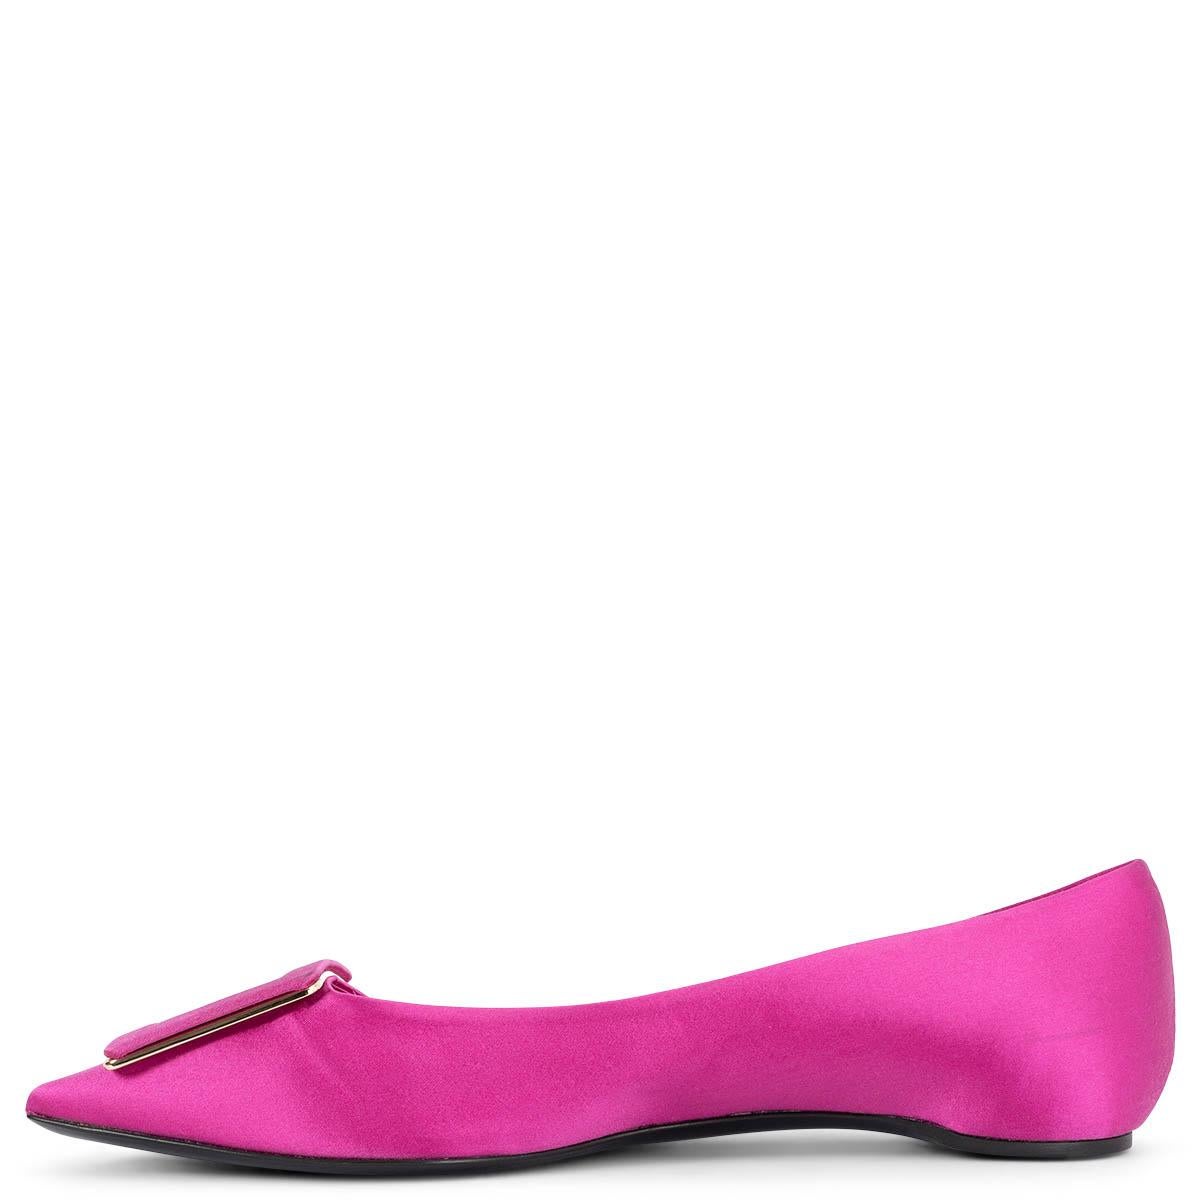 Pink ROGER VIVIER fuchsia satin TROMPETTE Ballet Flats Shoes 38 For Sale